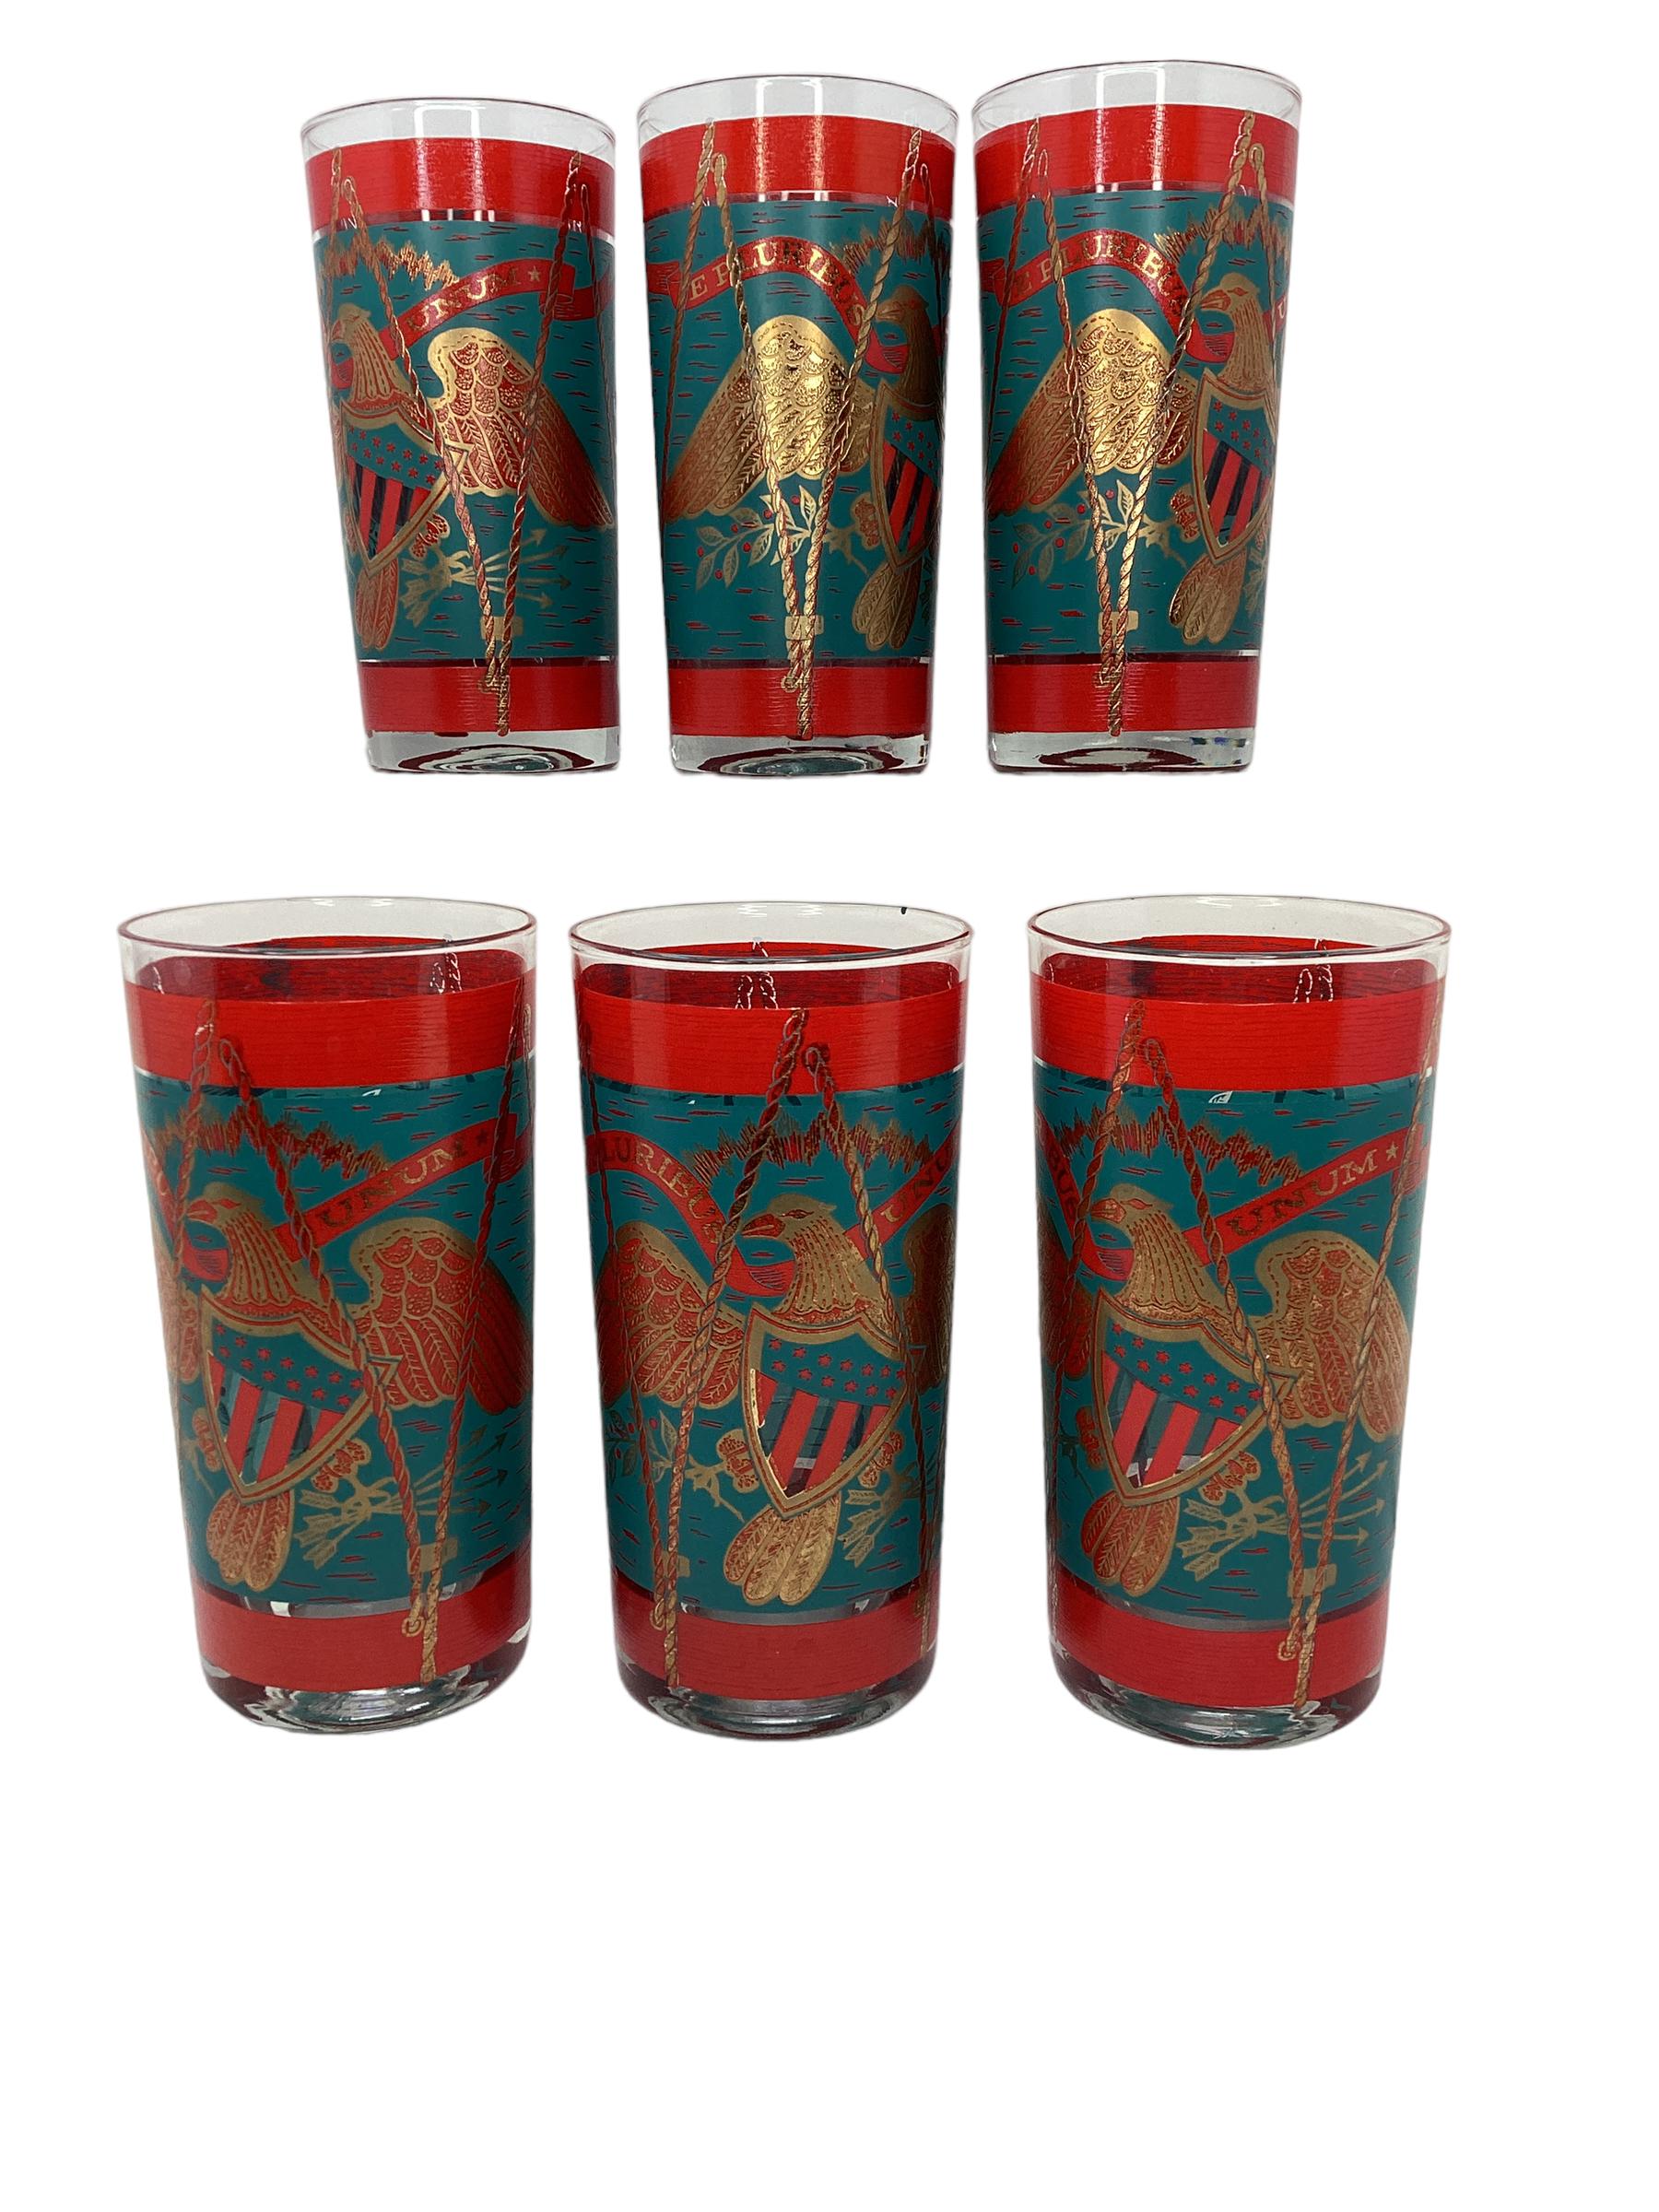 Set of 6 Vintage Cera Glassware Highball Glasses in the Regimental Drum pattern.